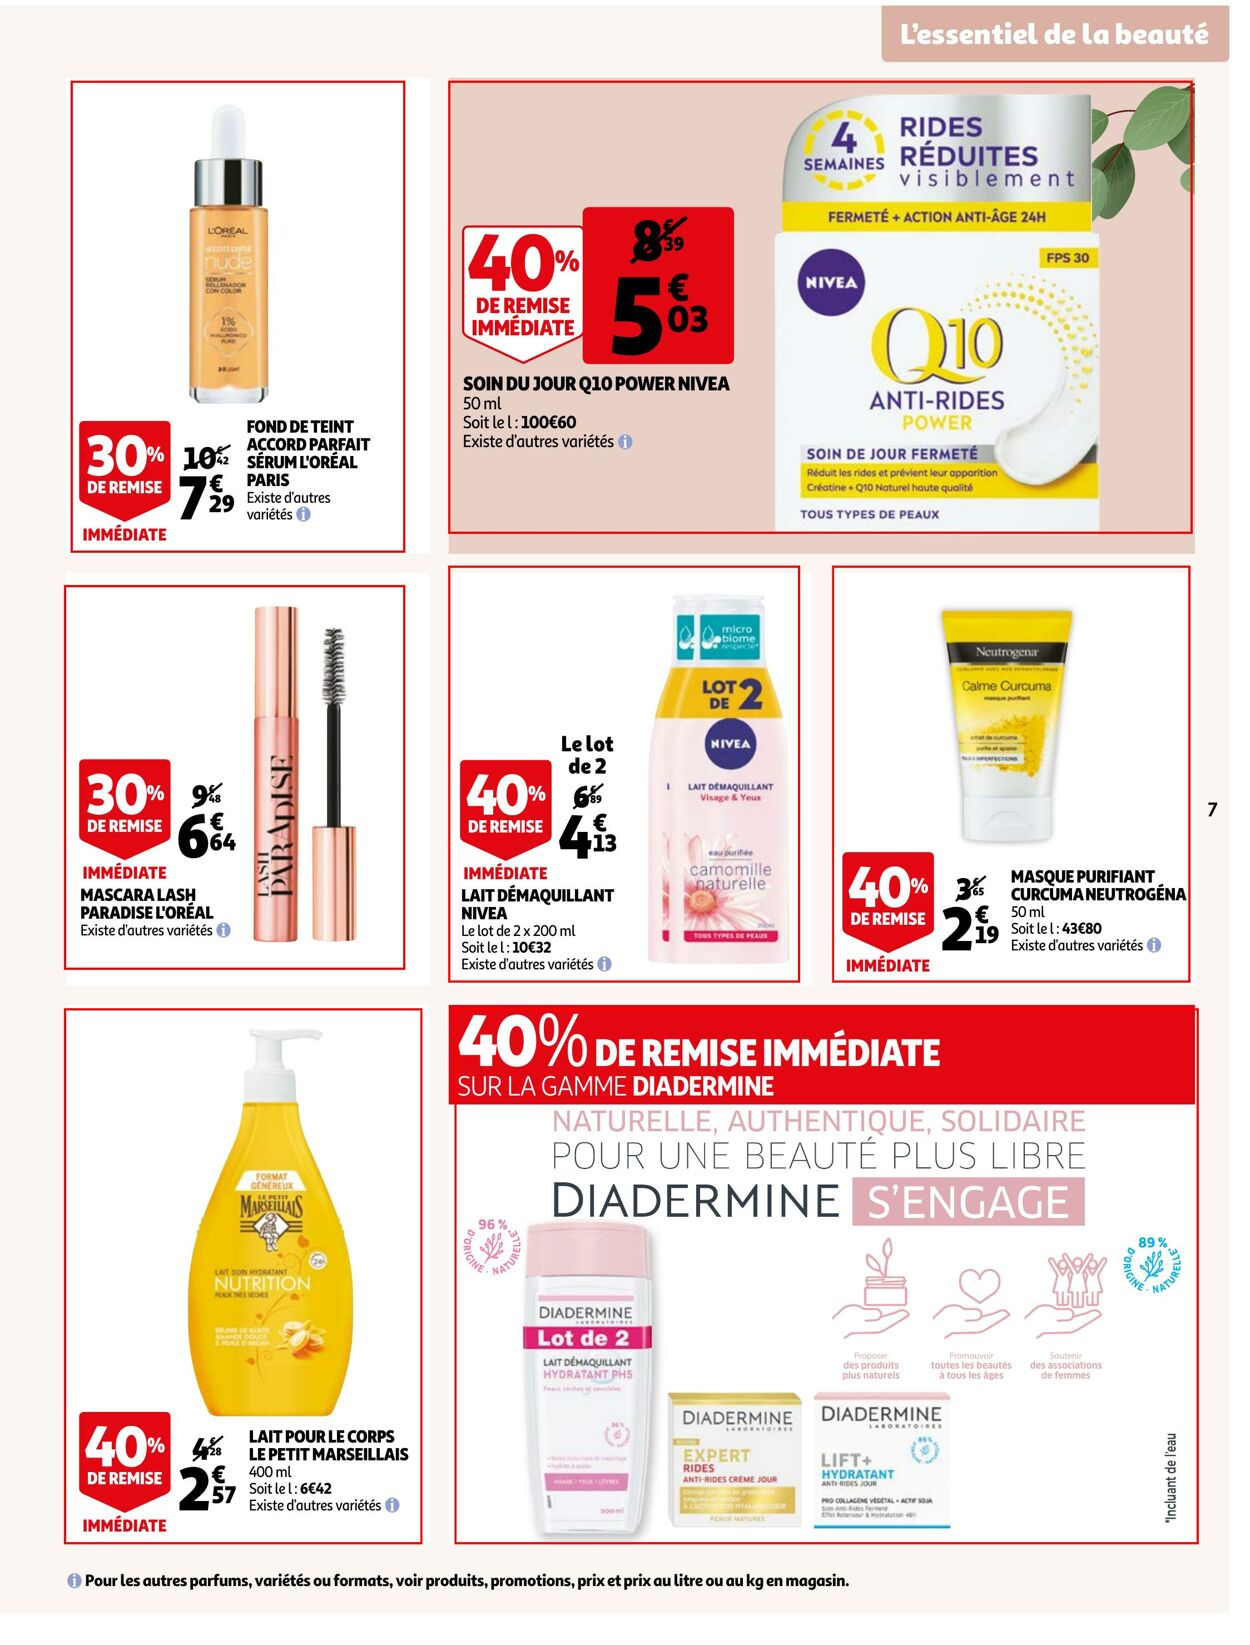 Catalogue Auchan 14.09.2022 - 20.09.2022